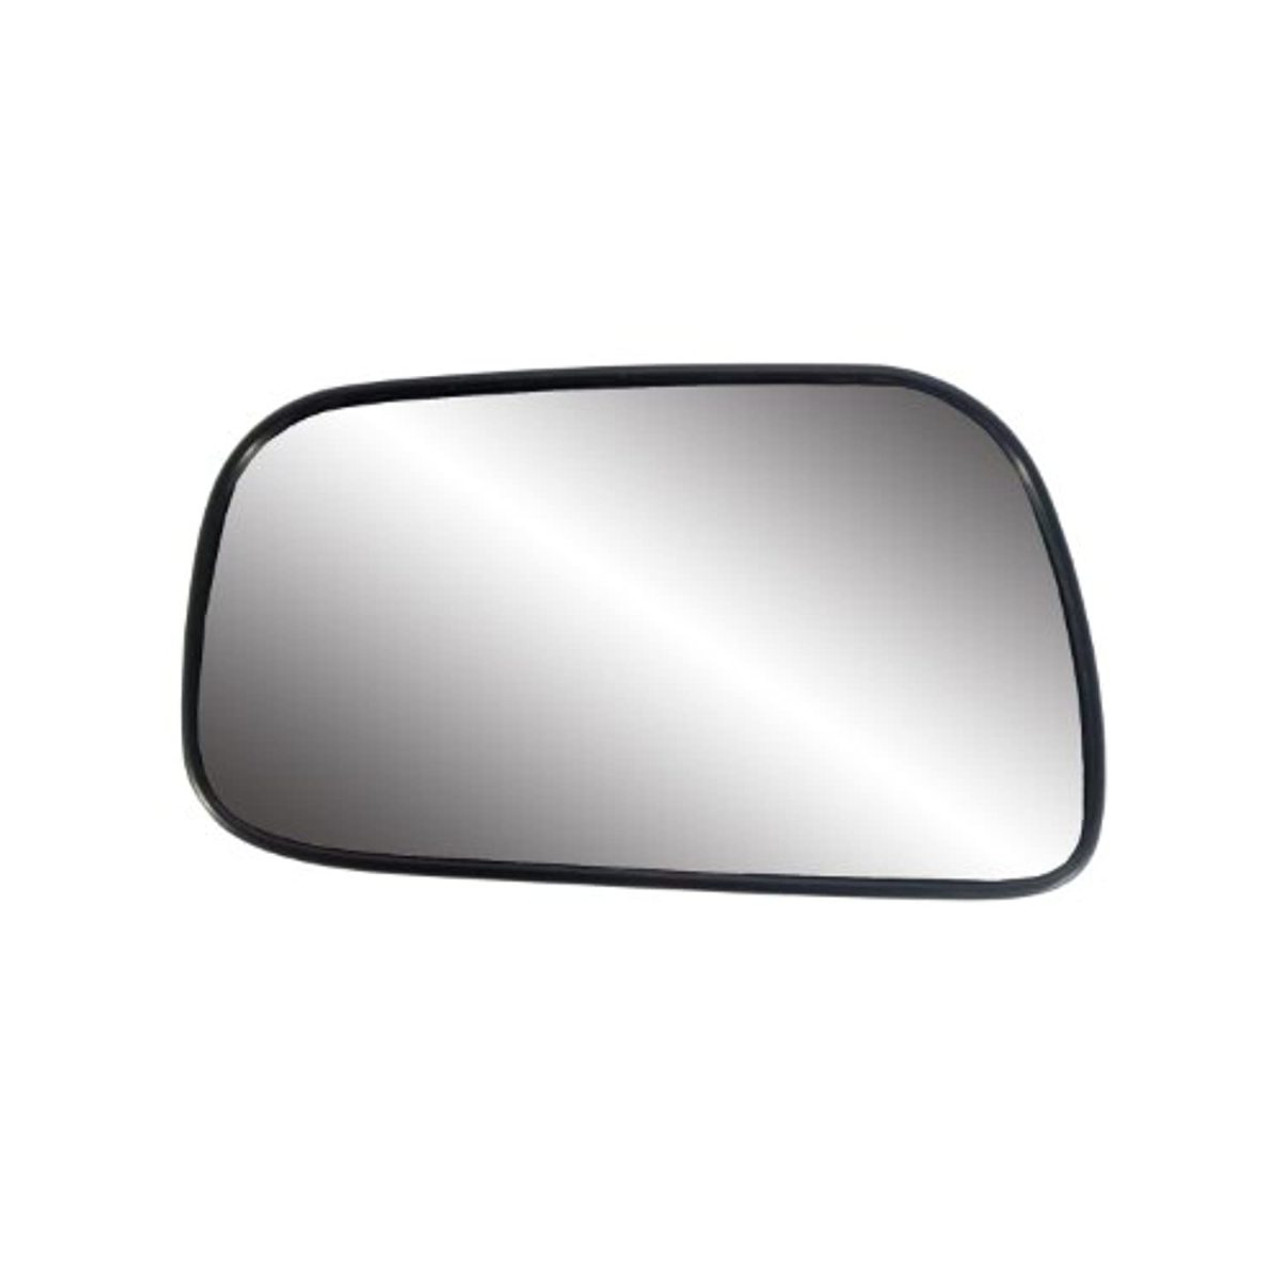 Driver Side Heated Mirror Glass w/Backing Plate, Toyota Camry Sedan US Built, 4 1/4" x 7 1/4" x 7"